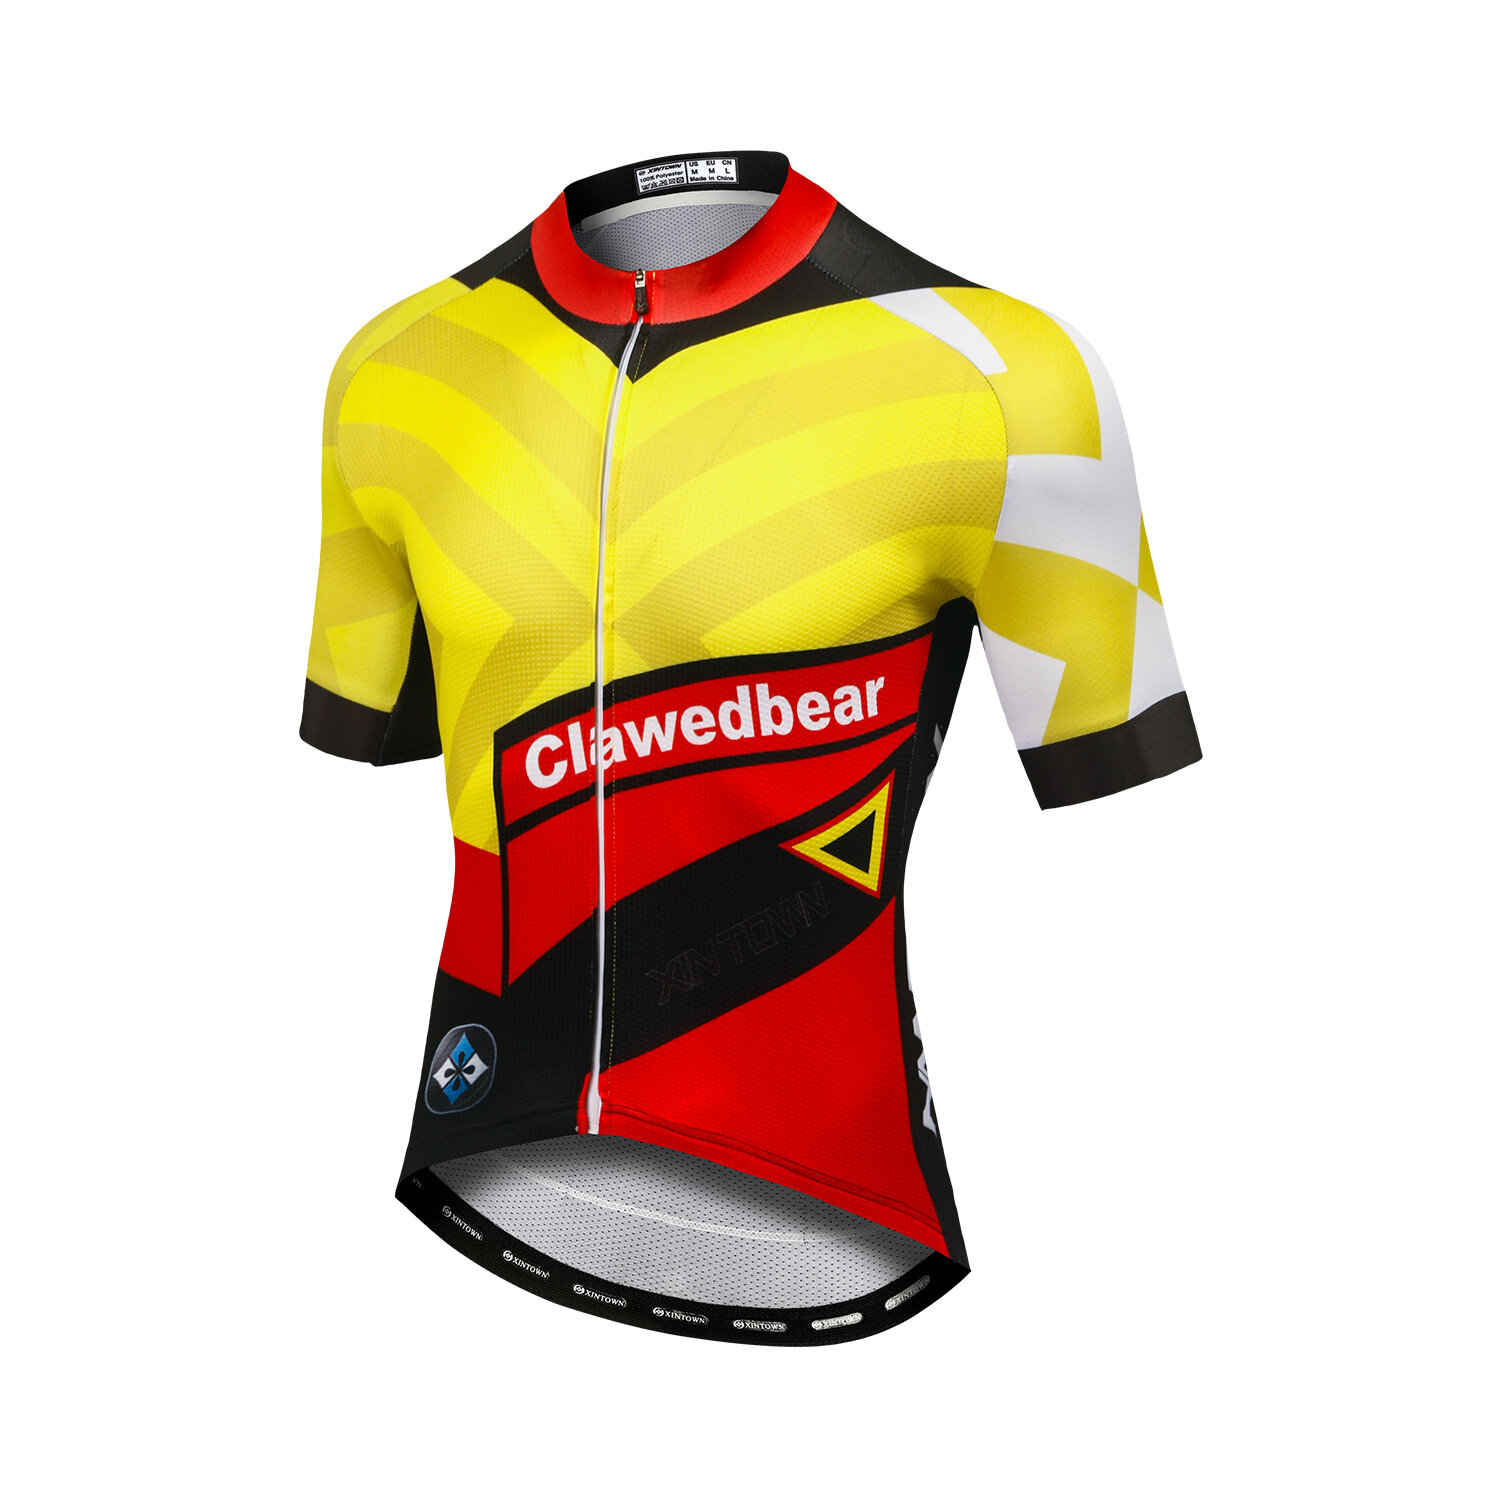 XINTOWN Ανδρικό ποδηλατικό μπλουζάκι με κοντά μανίκια, γρήγορο στέγνωμα, υφάσματα αποβολής υγρασίας με διάφορες επιλογές χρωμάτων